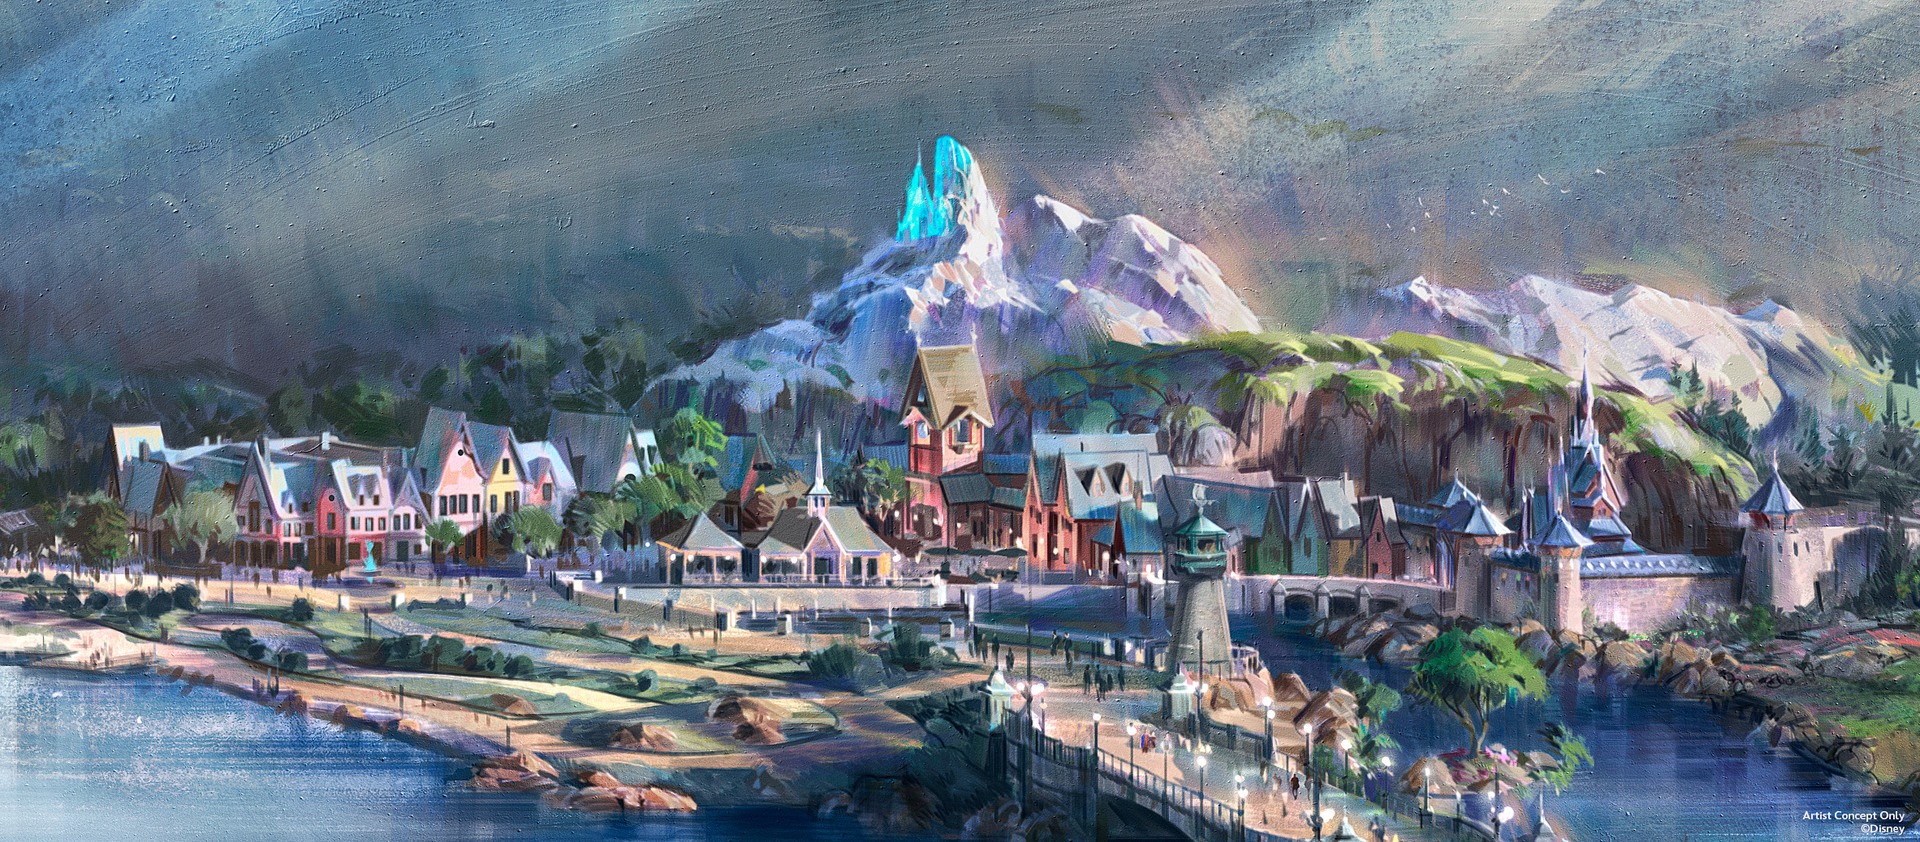 Disneyland Paris World of Frozen Update: When is it opening?